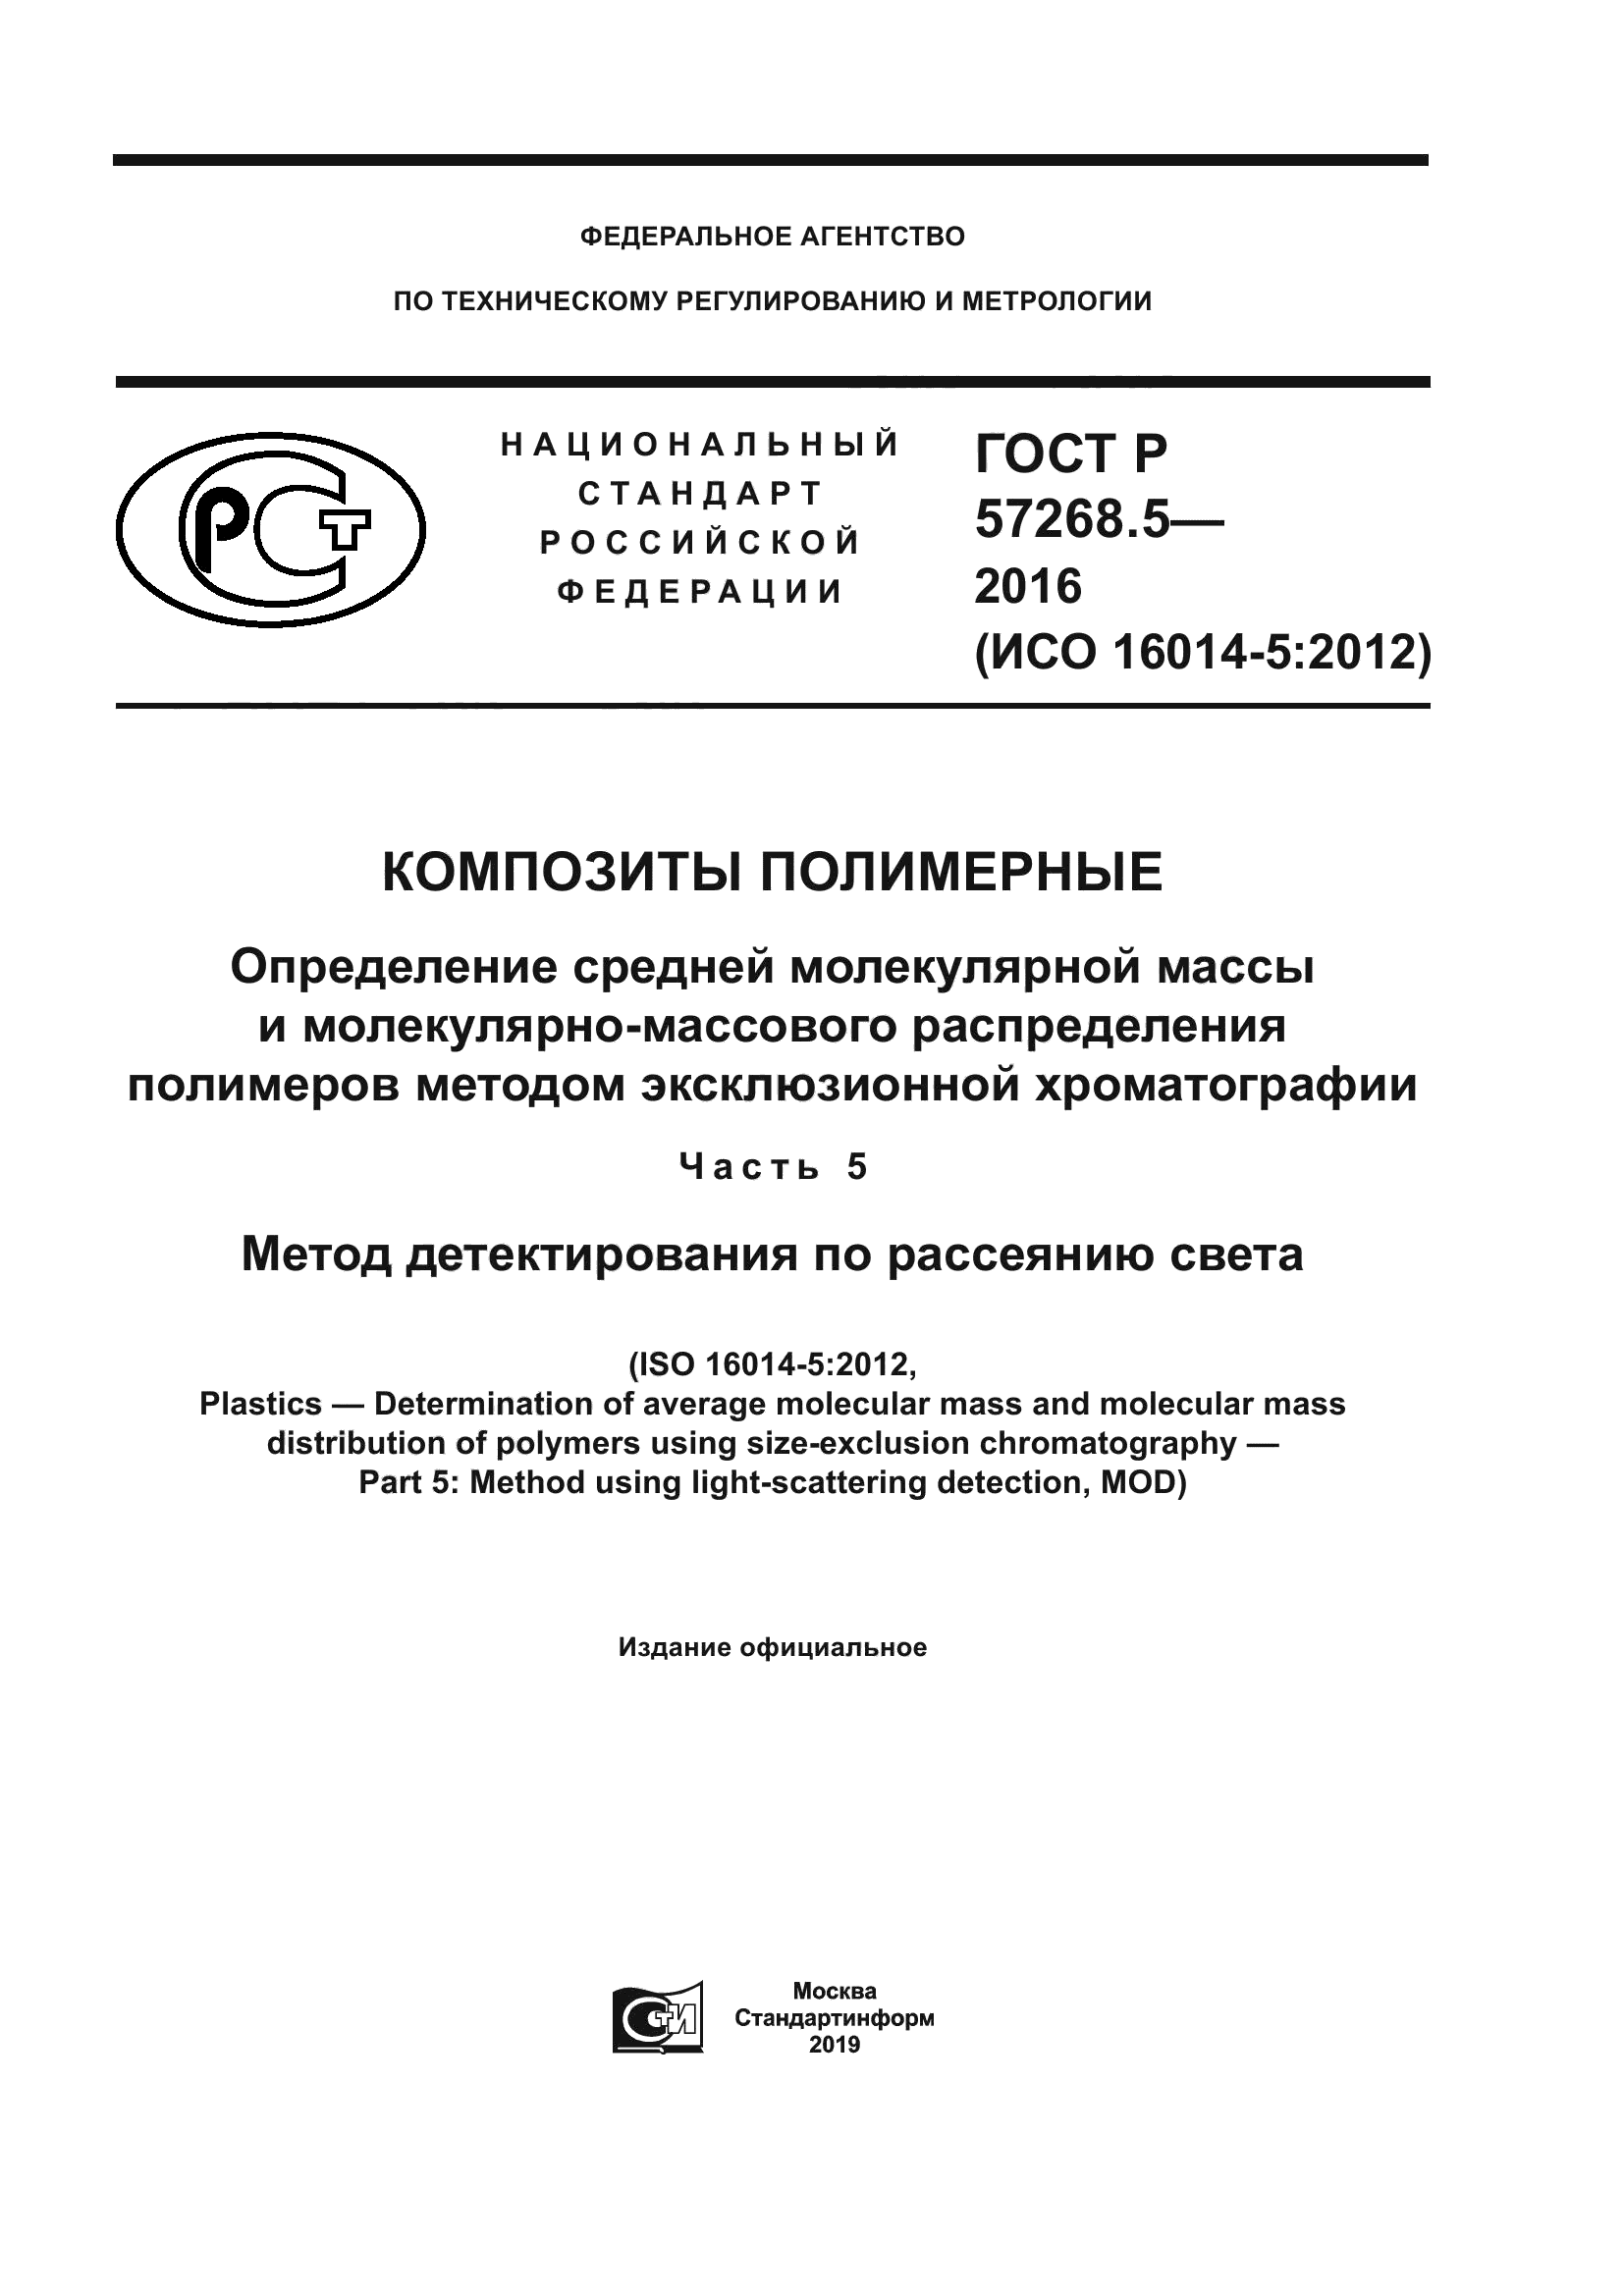 ГОСТ Р 57268.5-2016